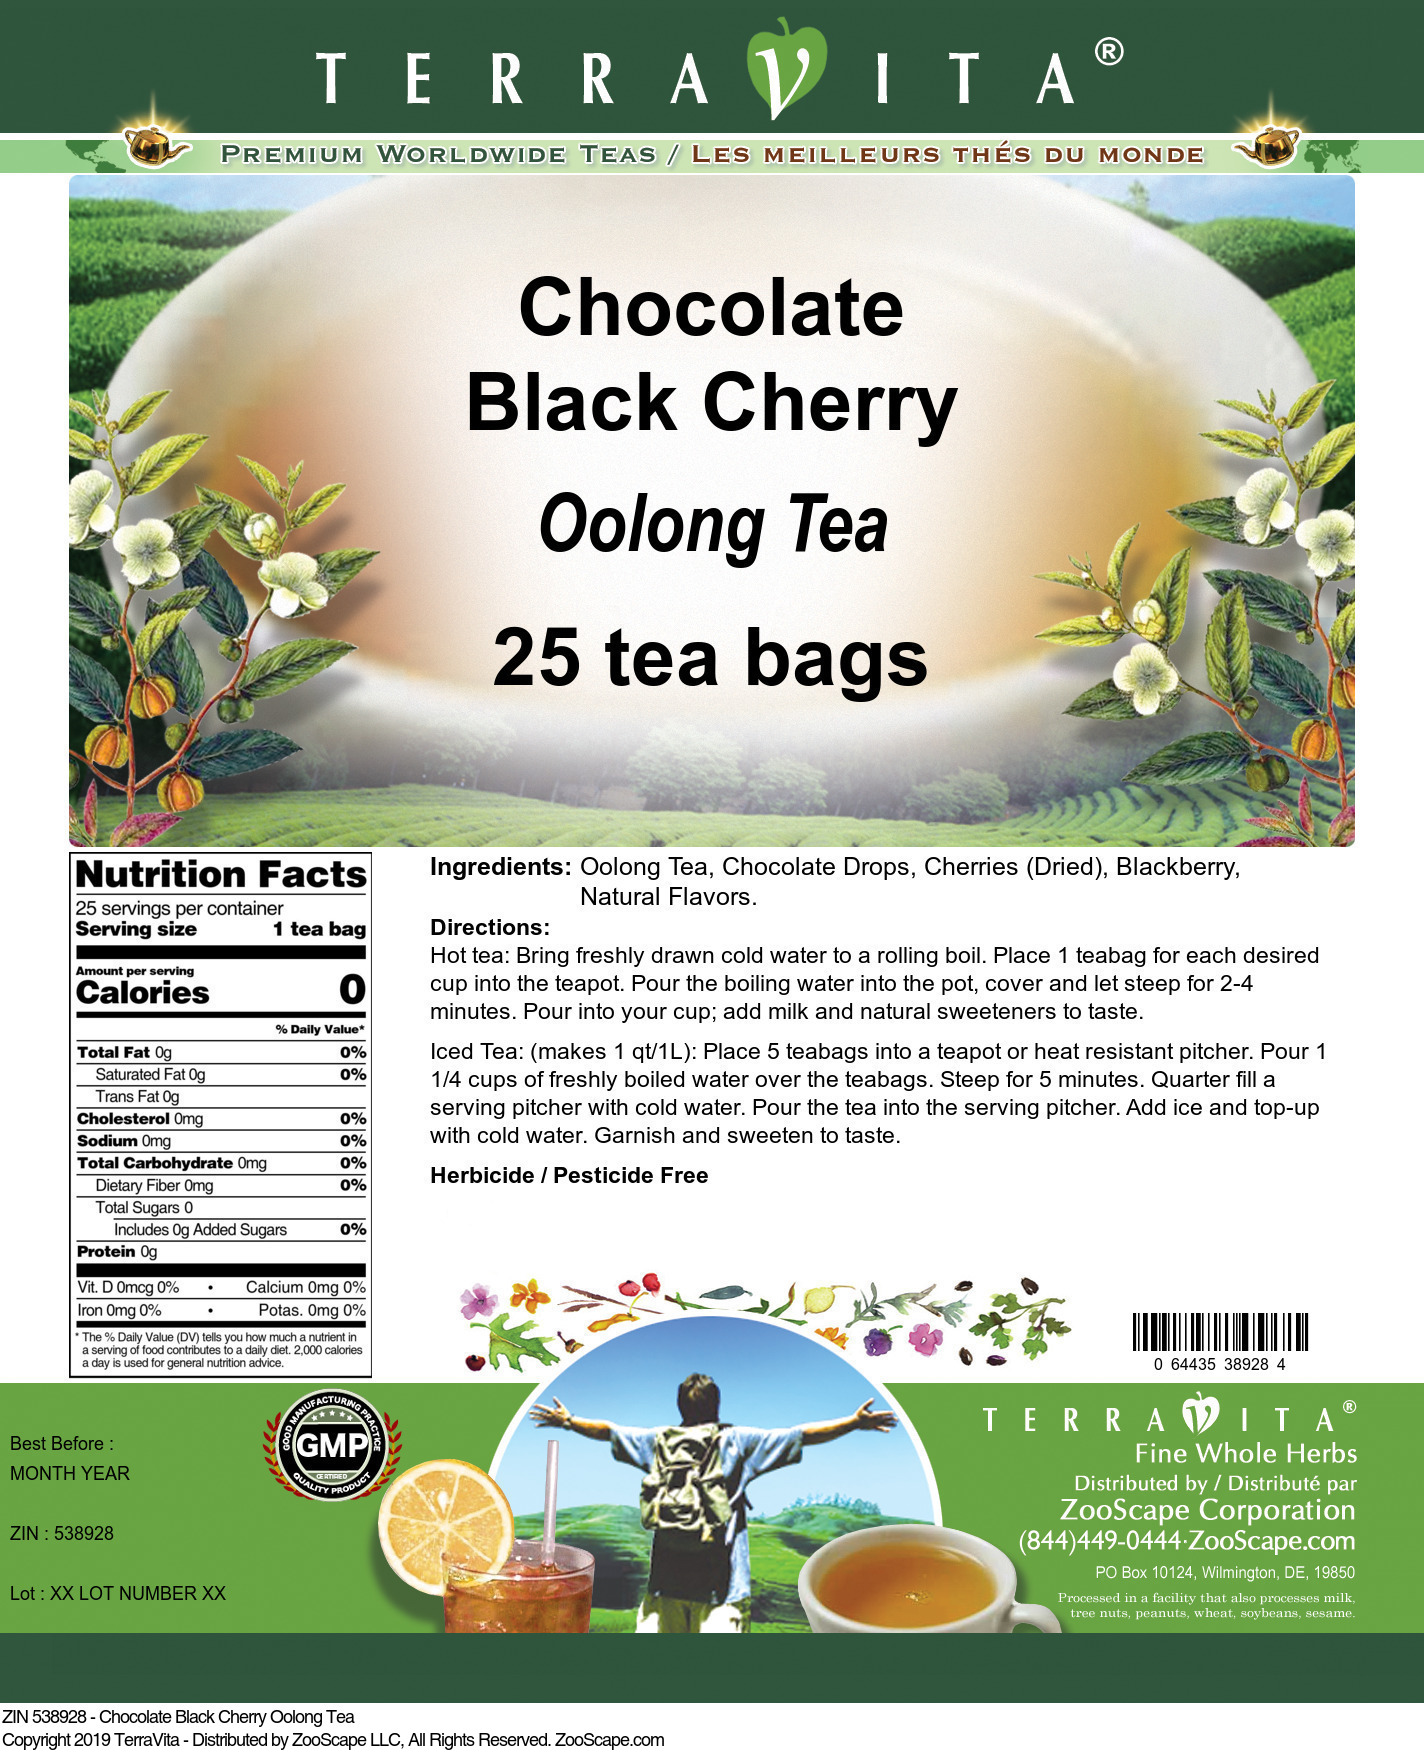 Chocolate Black Cherry Oolong Tea - Label